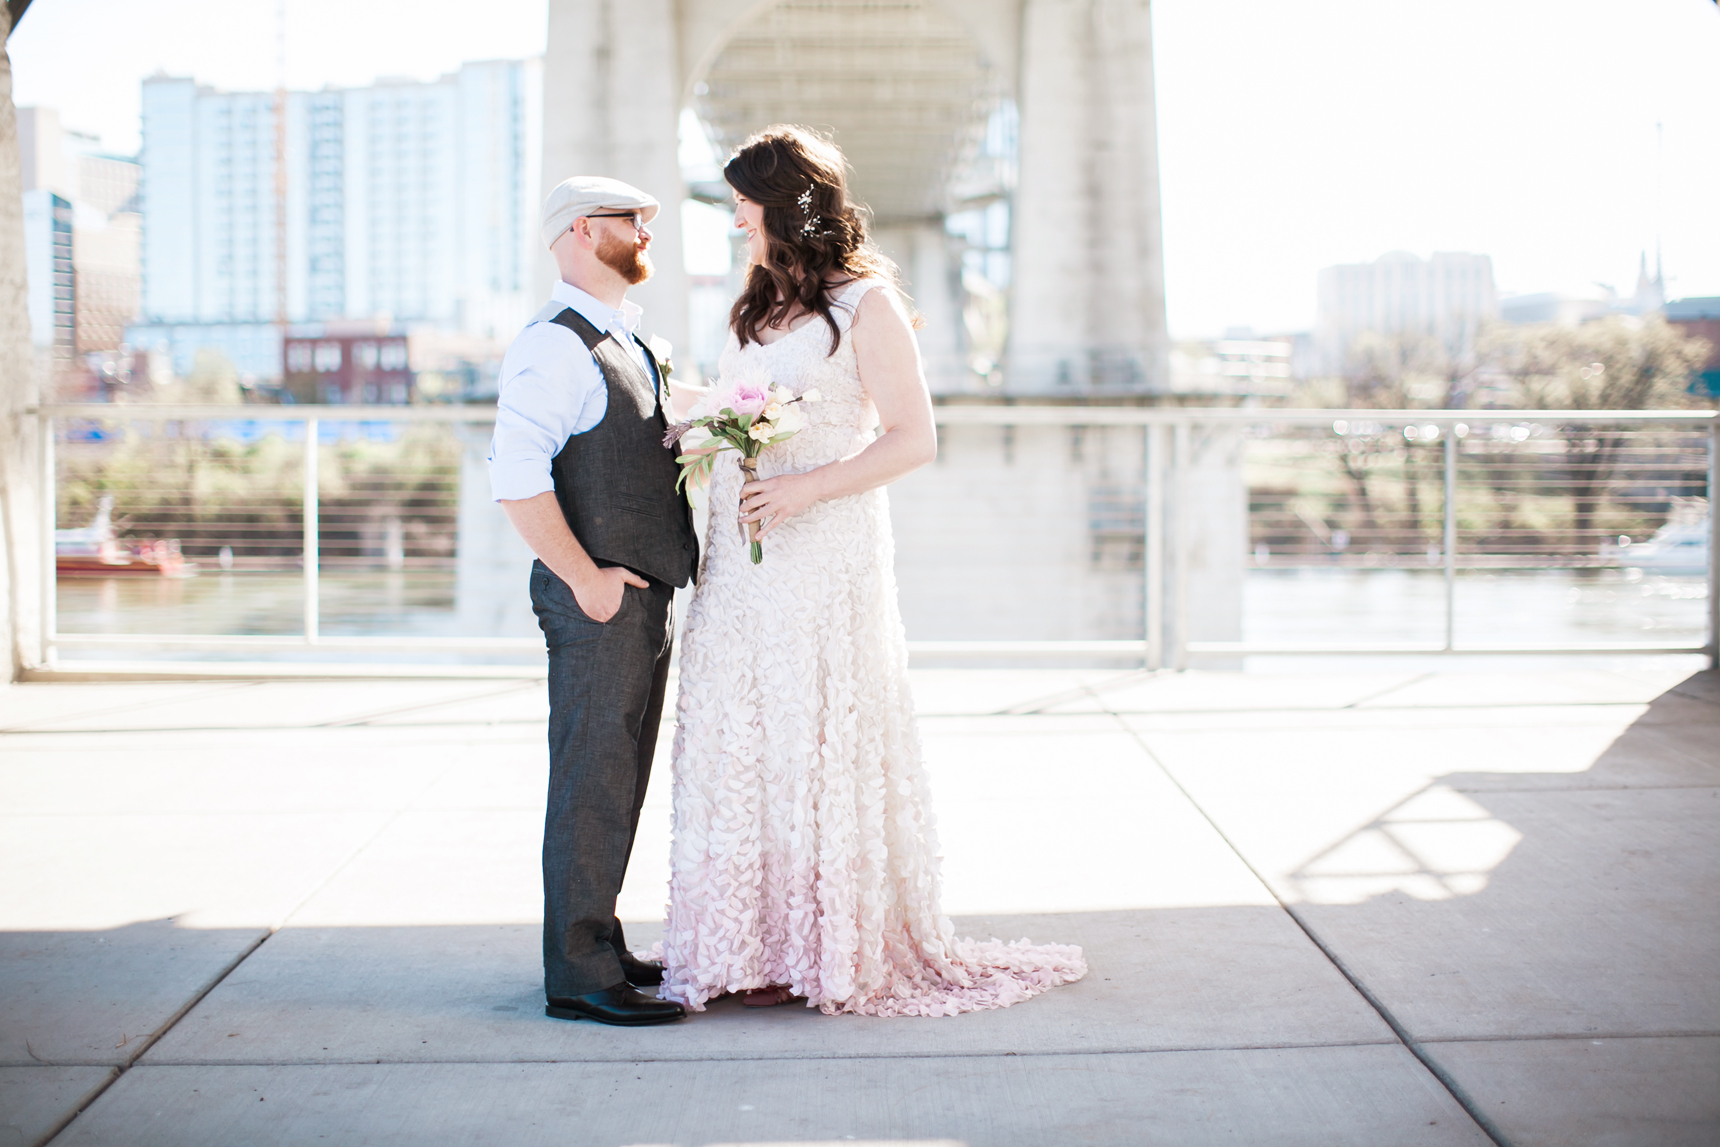 Nashville pedestrian bridge wedding photos